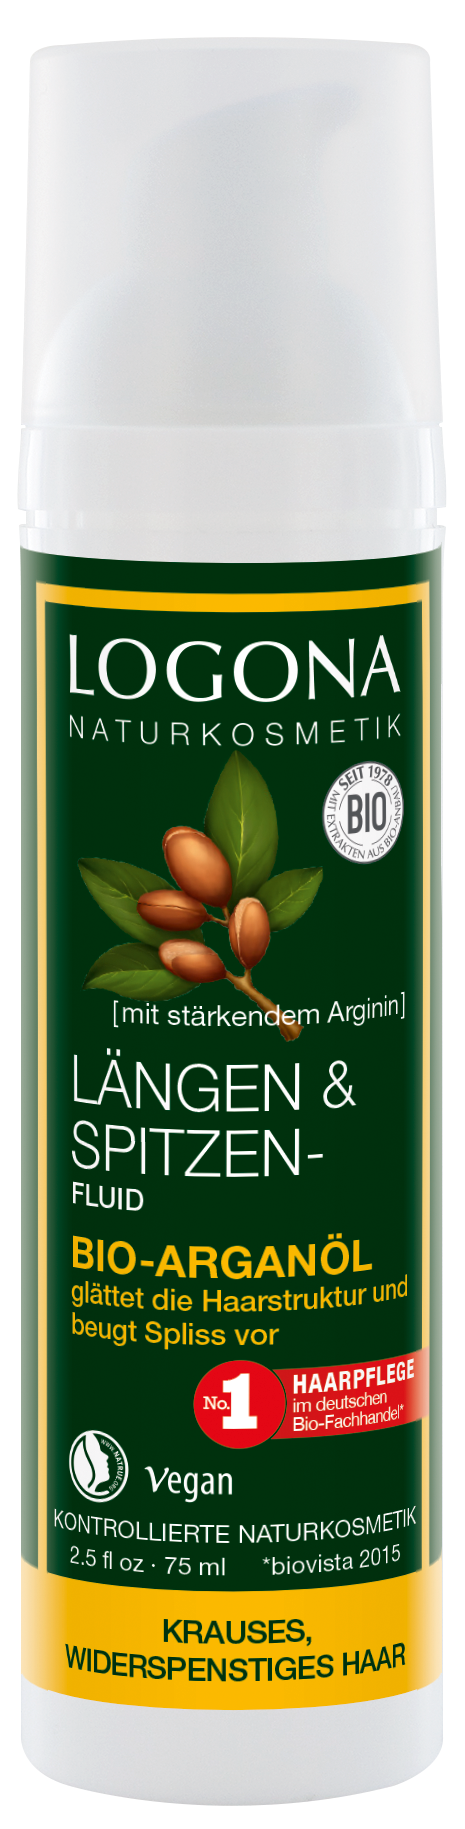 Spitzenfluid LOGONA Naturkosmetik Bio-Arganöl Längen- | und